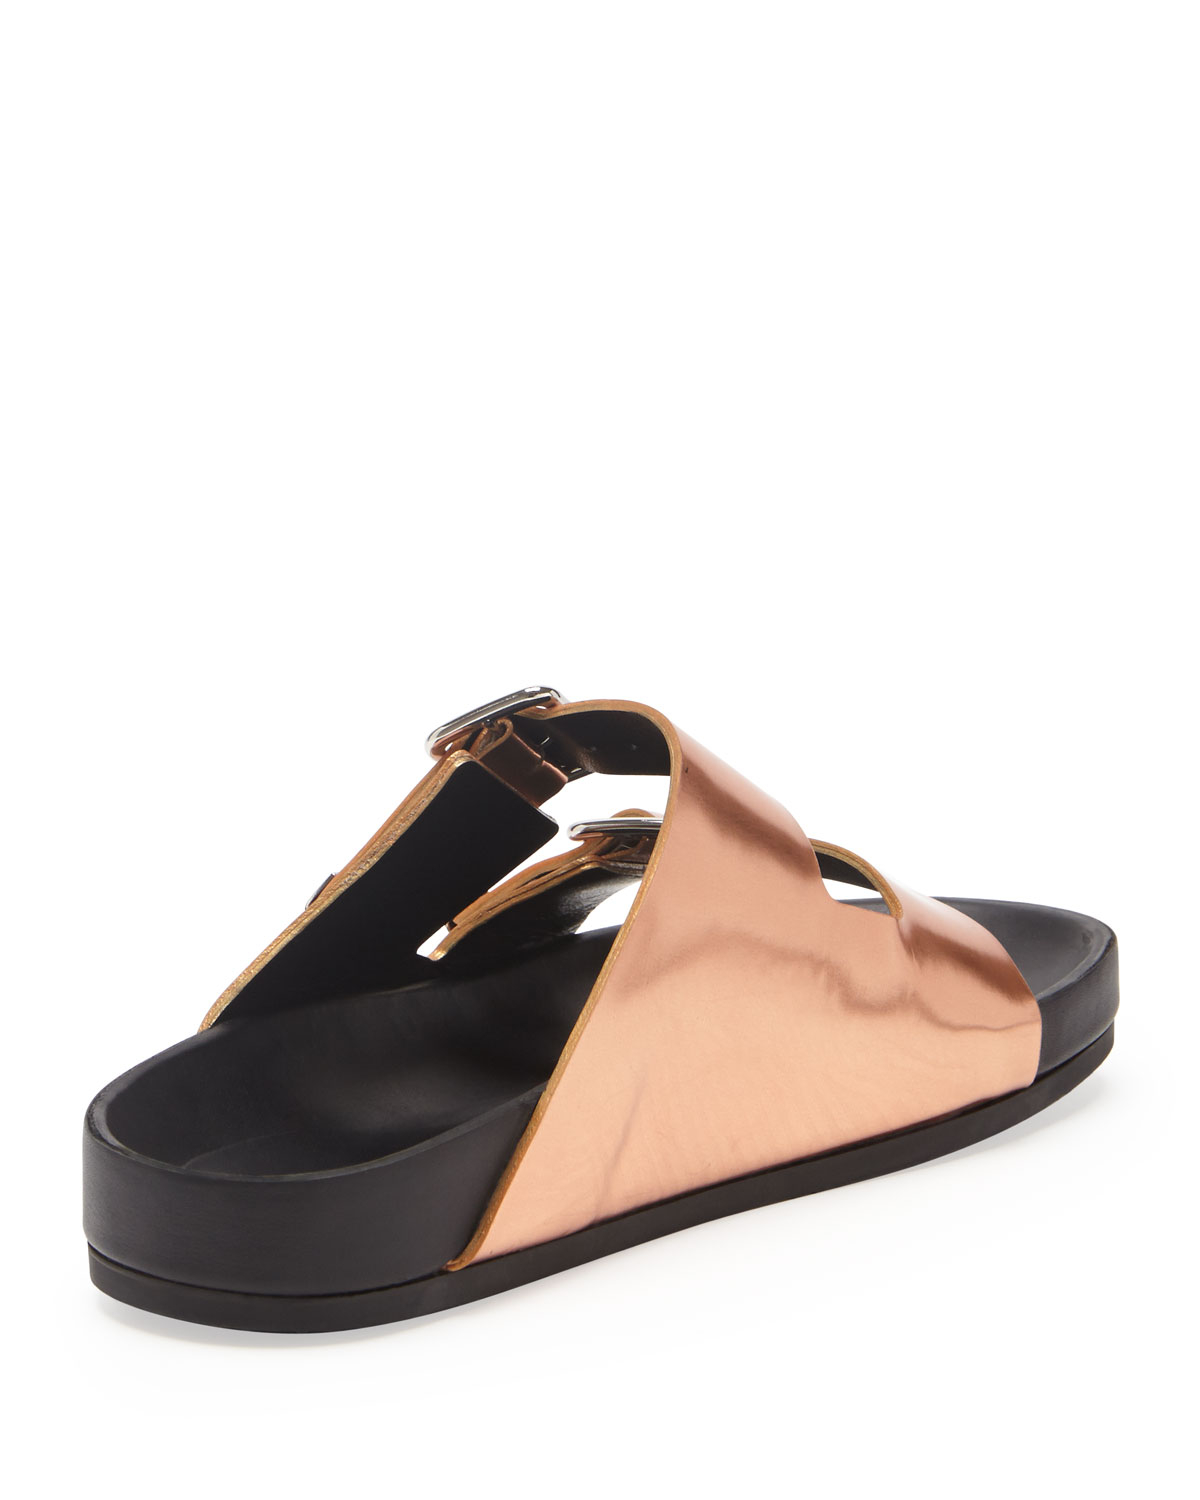 Lyst - Givenchy Swiss Metallic Flat Sandal in Metallic